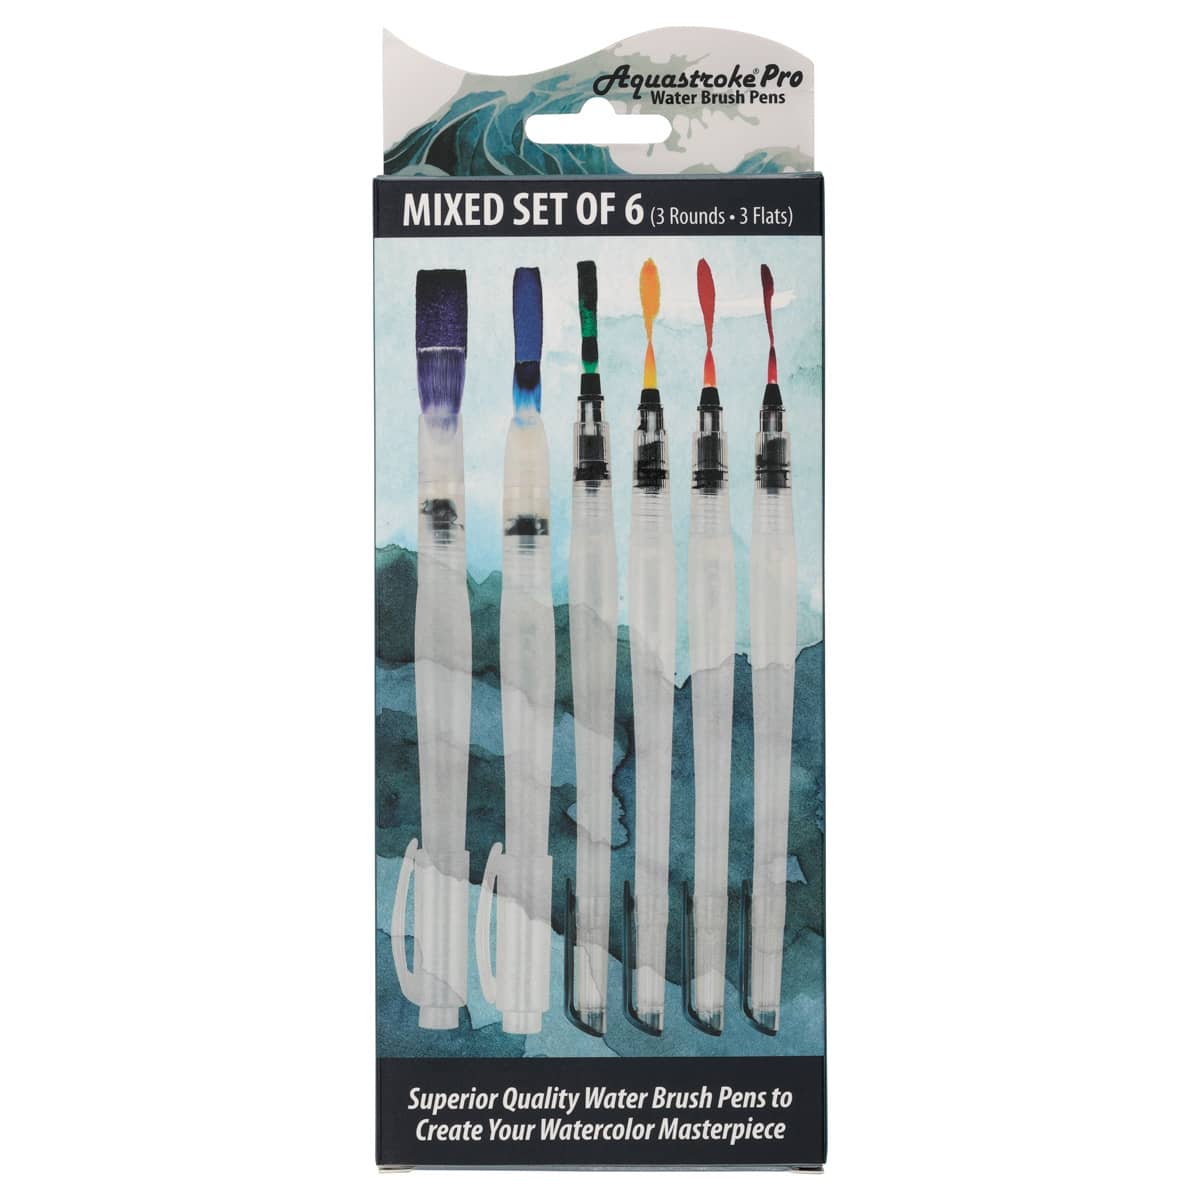 Aquastroke Pro Water Brush Pen, Mixed Set of 6